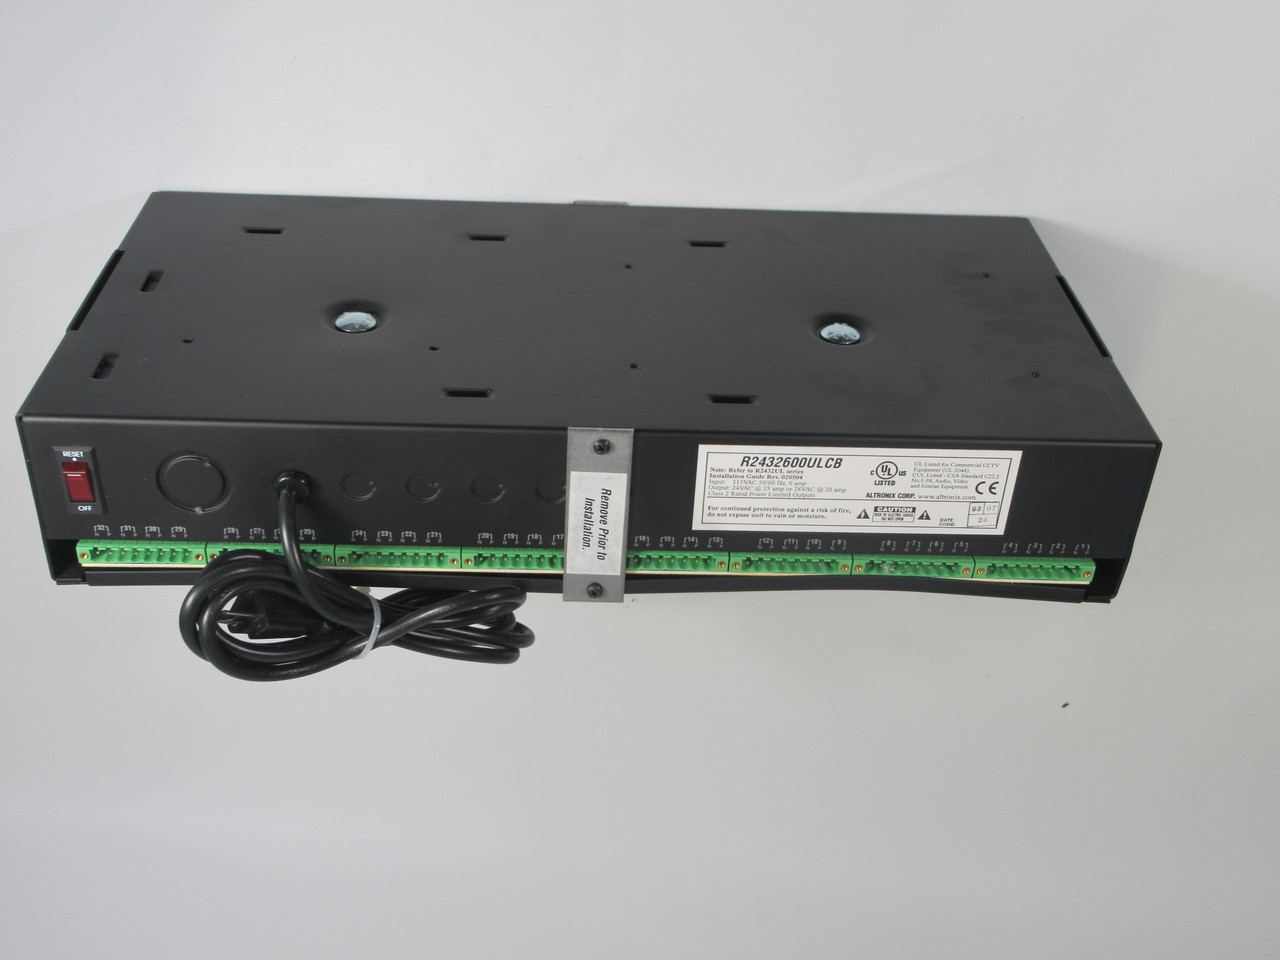 Altronix R2432600ULCB CCTV Power Supply 32 PTC Class 2 Outputs 24/28VAC ! NEW !